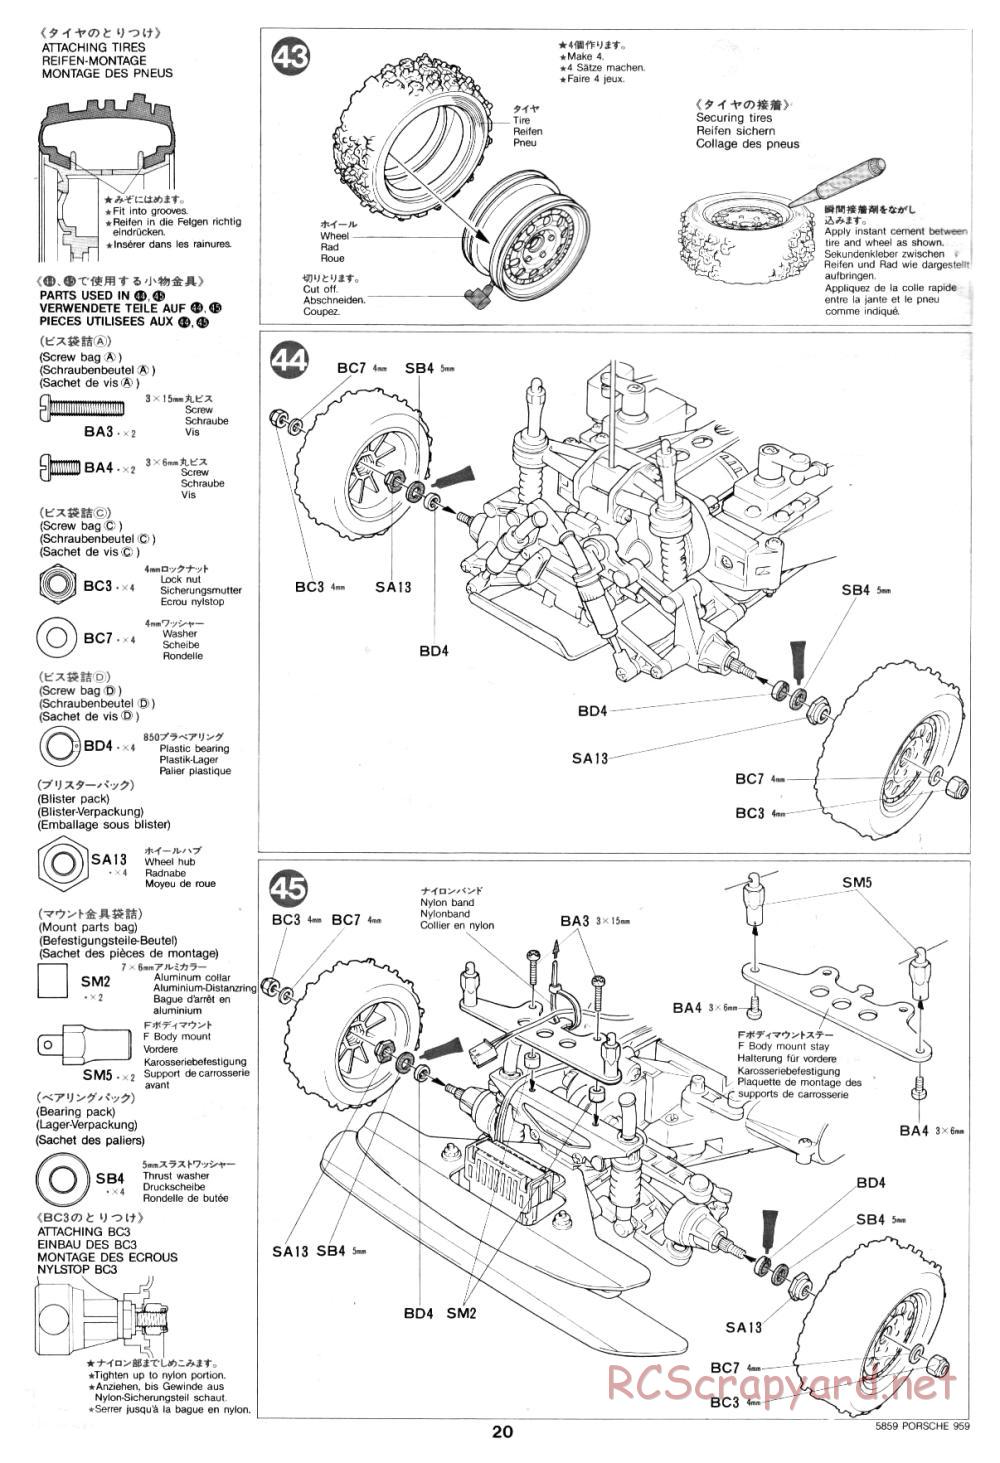 Tamiya - Porsche 959 - 58059 - Manual - Page 20